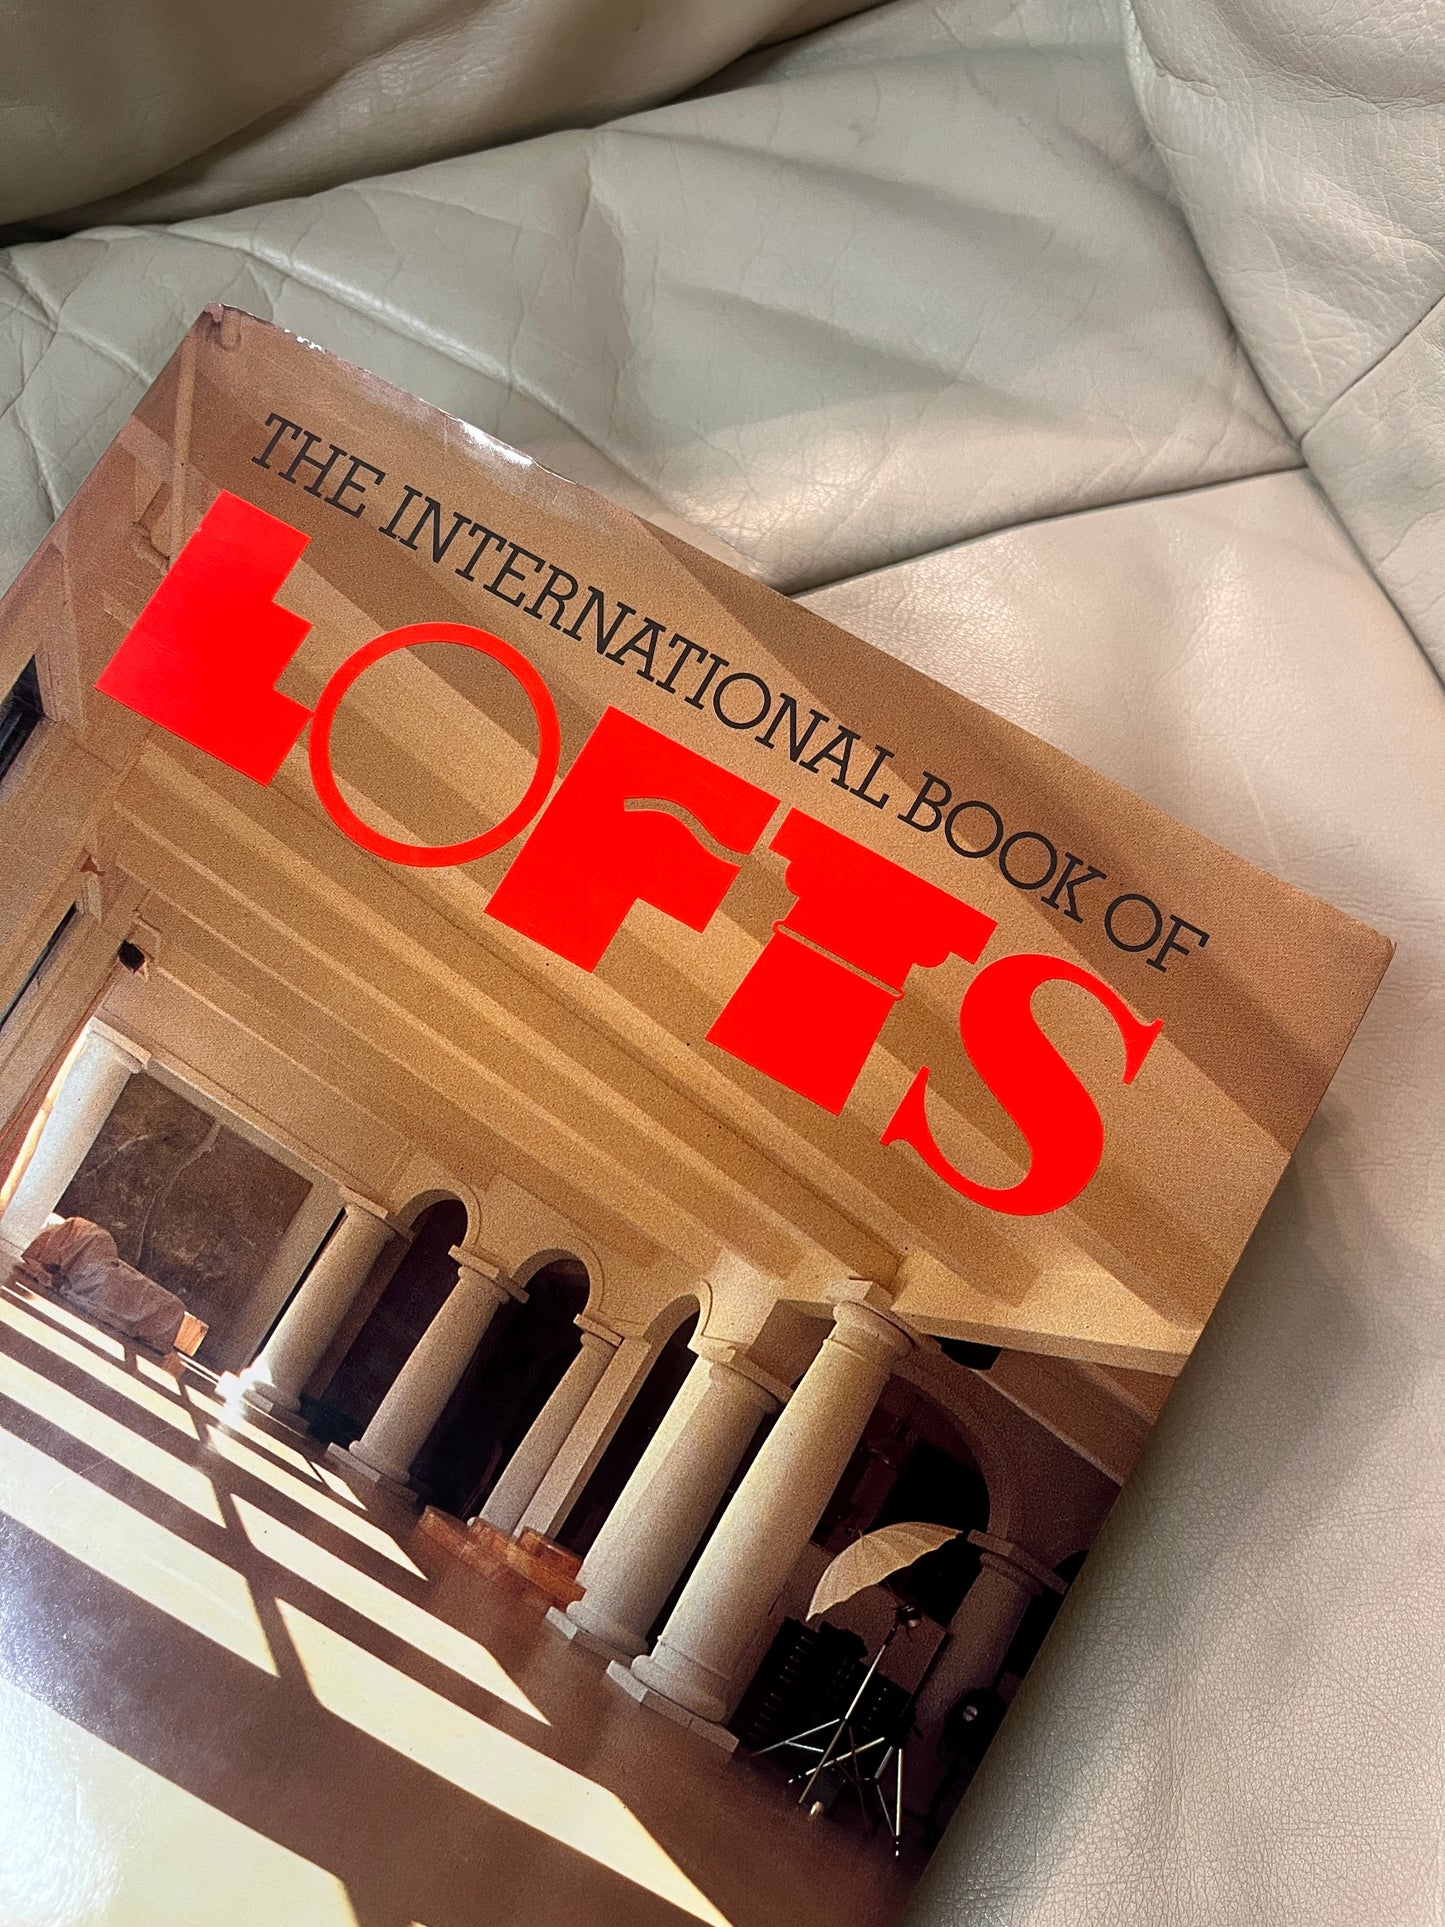 The International Book of Lofts